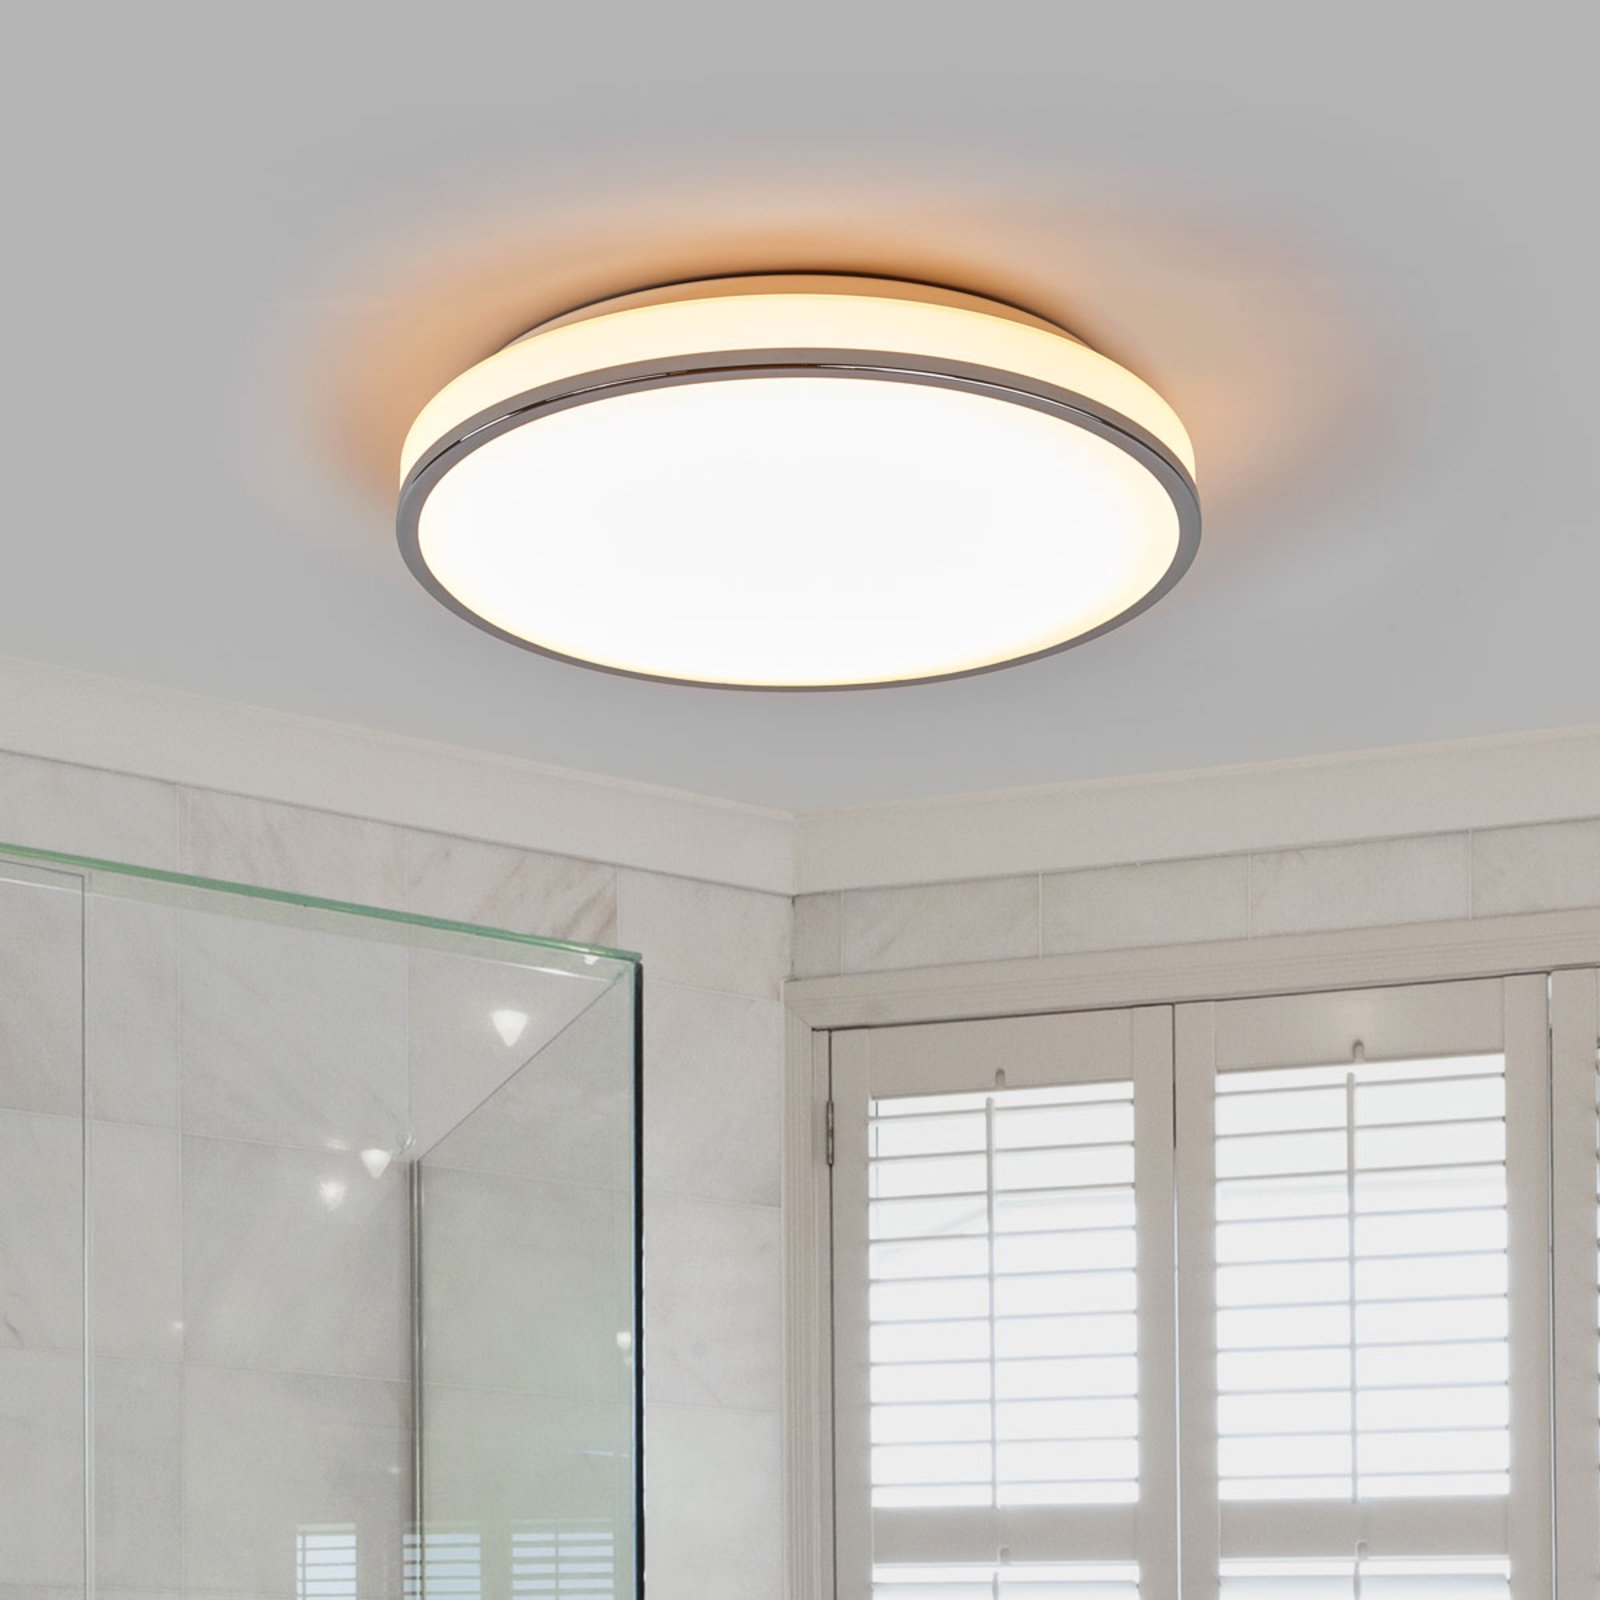 Bathroom light Lyss, LEDs and a good light output